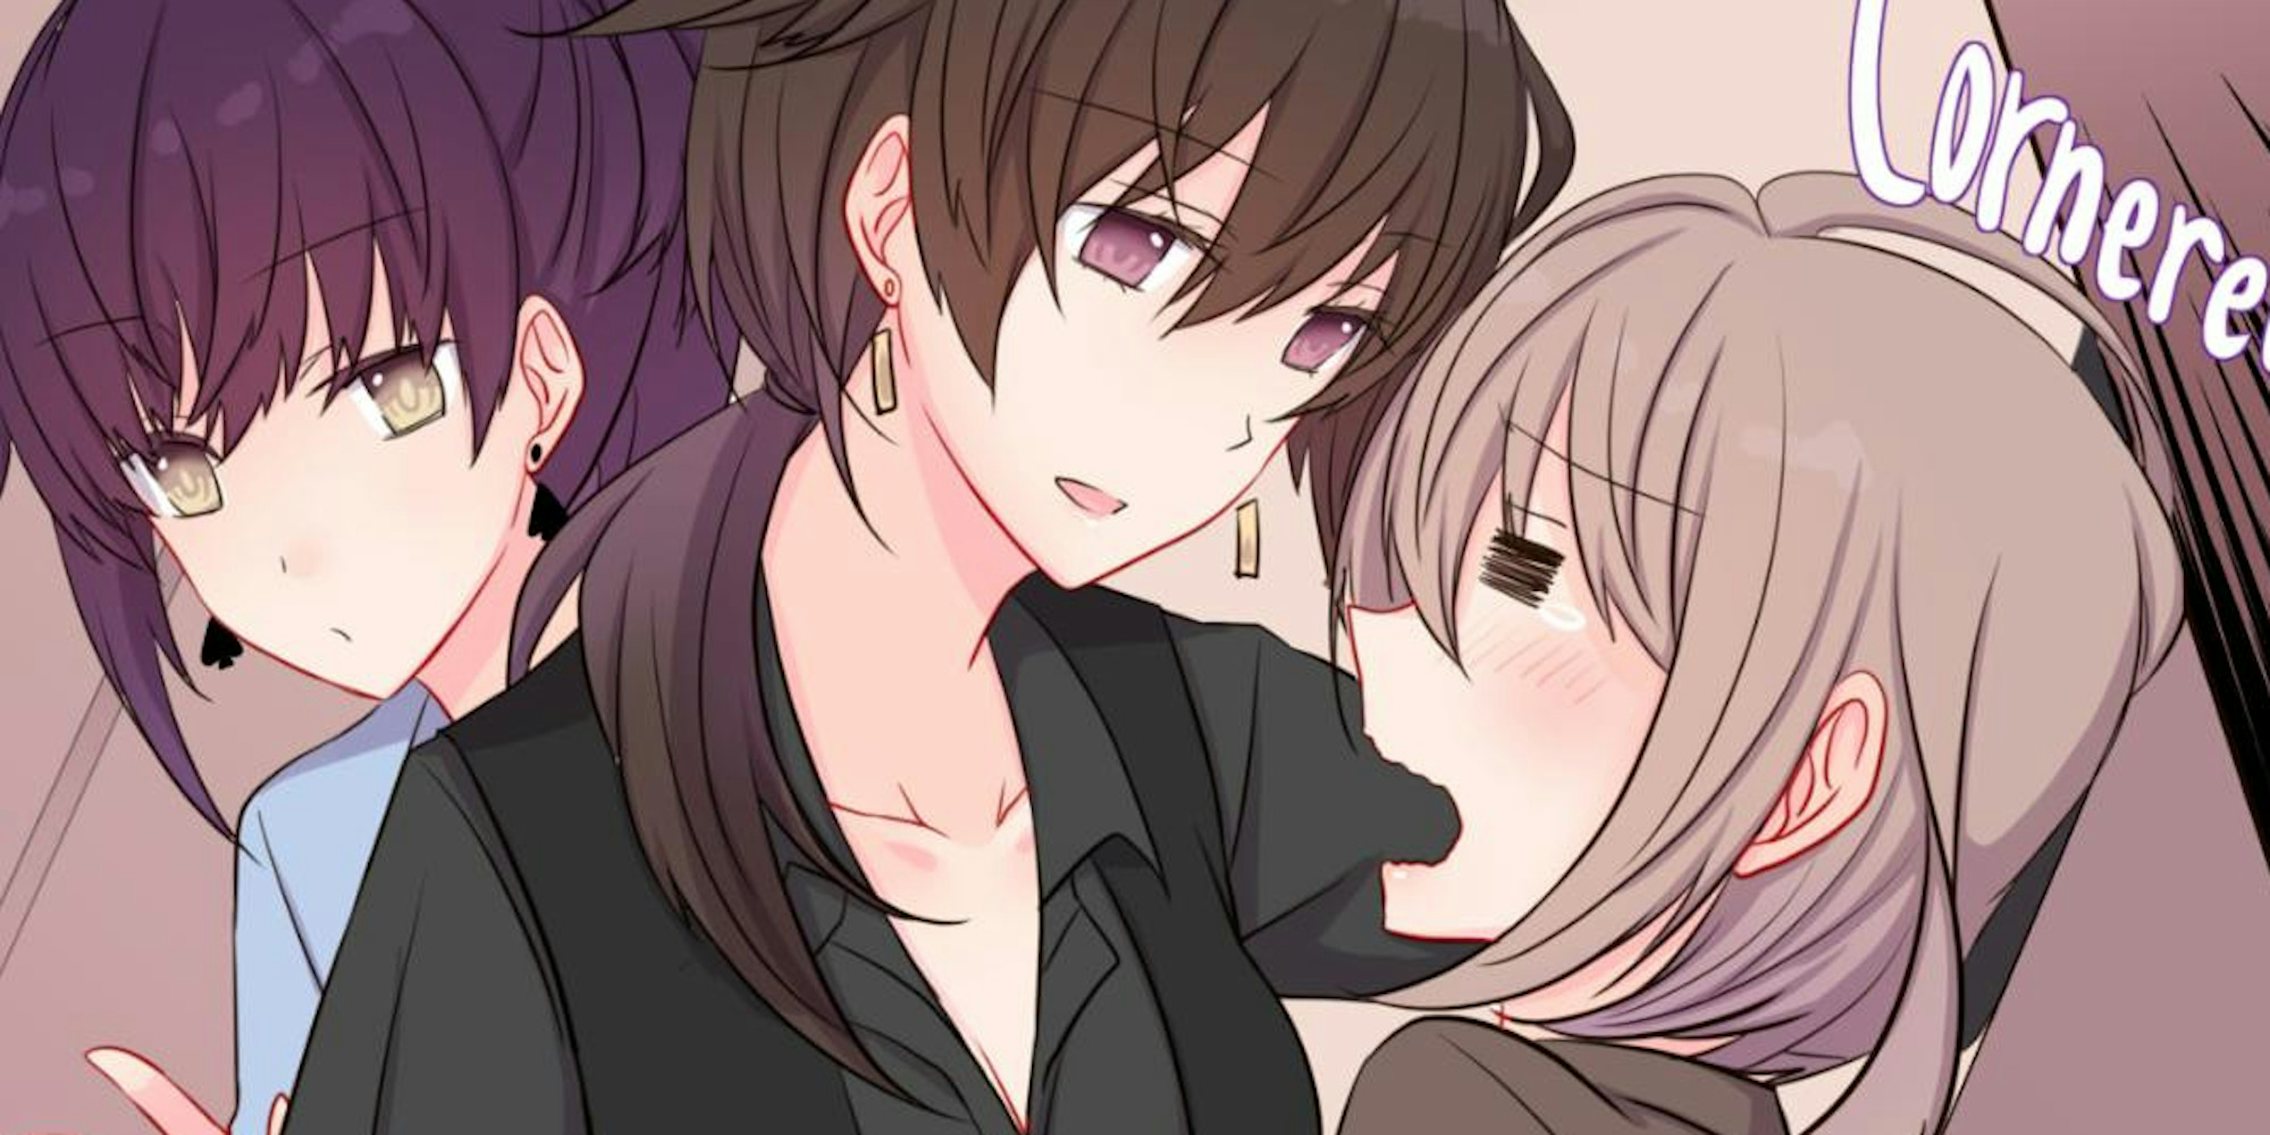 Cartoon Hardcore Anime Lesbians - Lesbian Hentai: Best Yuri Hentai to Read and Stream Online